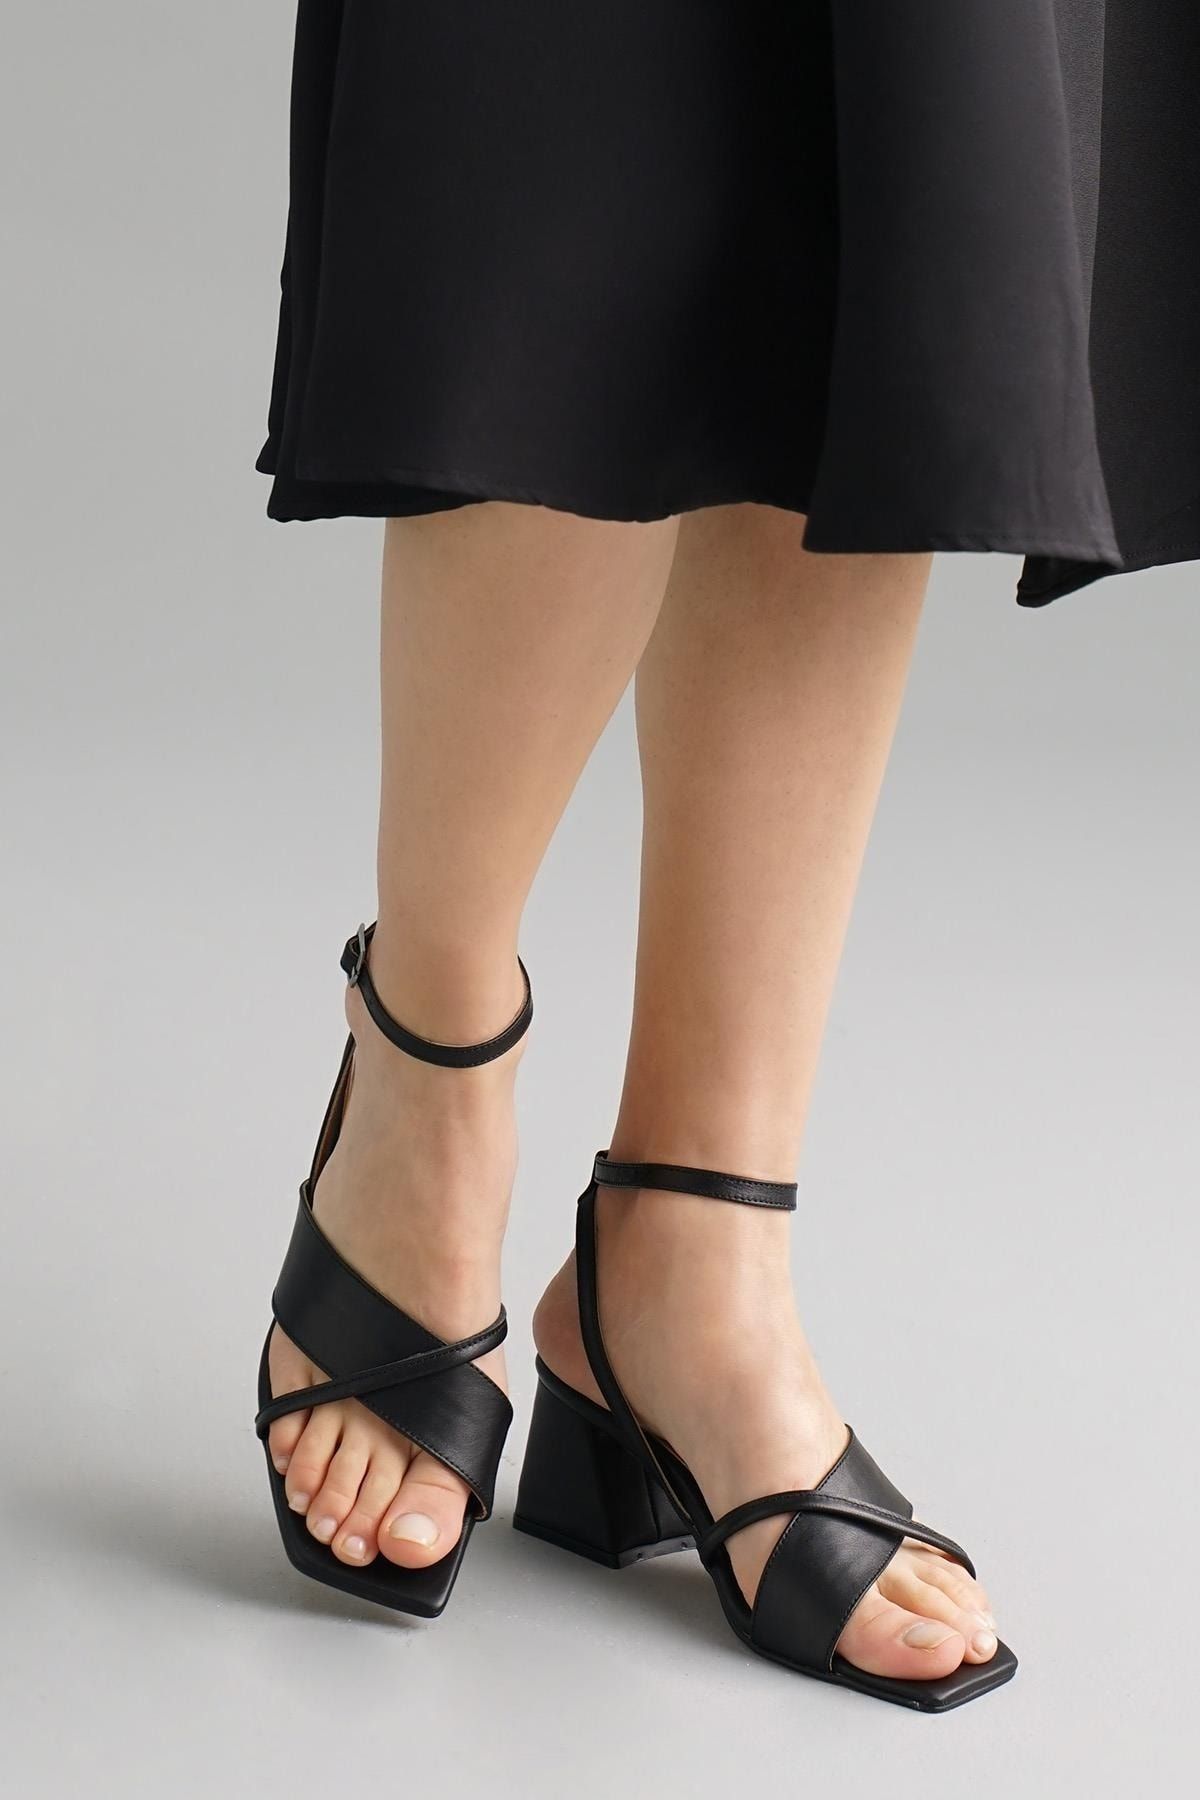 Mio Gusto Tania Siyah Renk Kadın Topuklu Sandalet